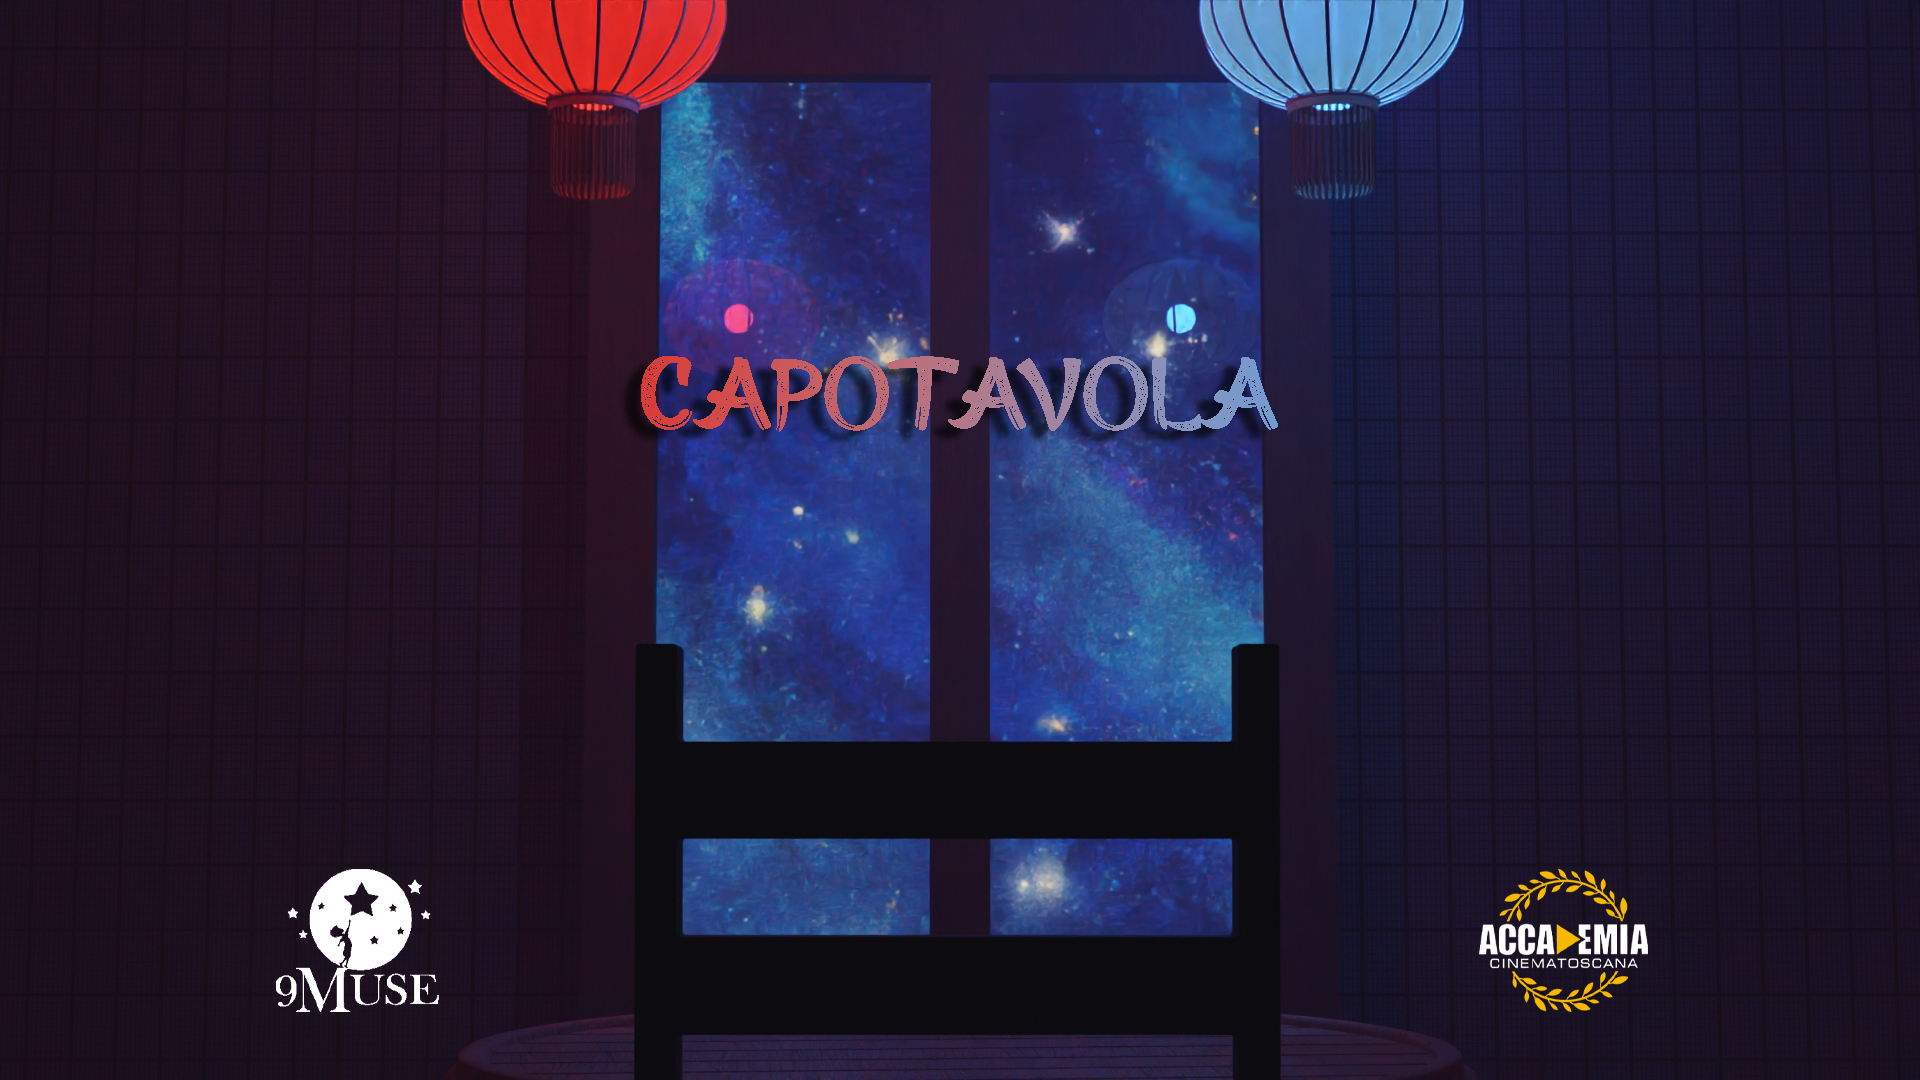 Capotavola -
shortmovie